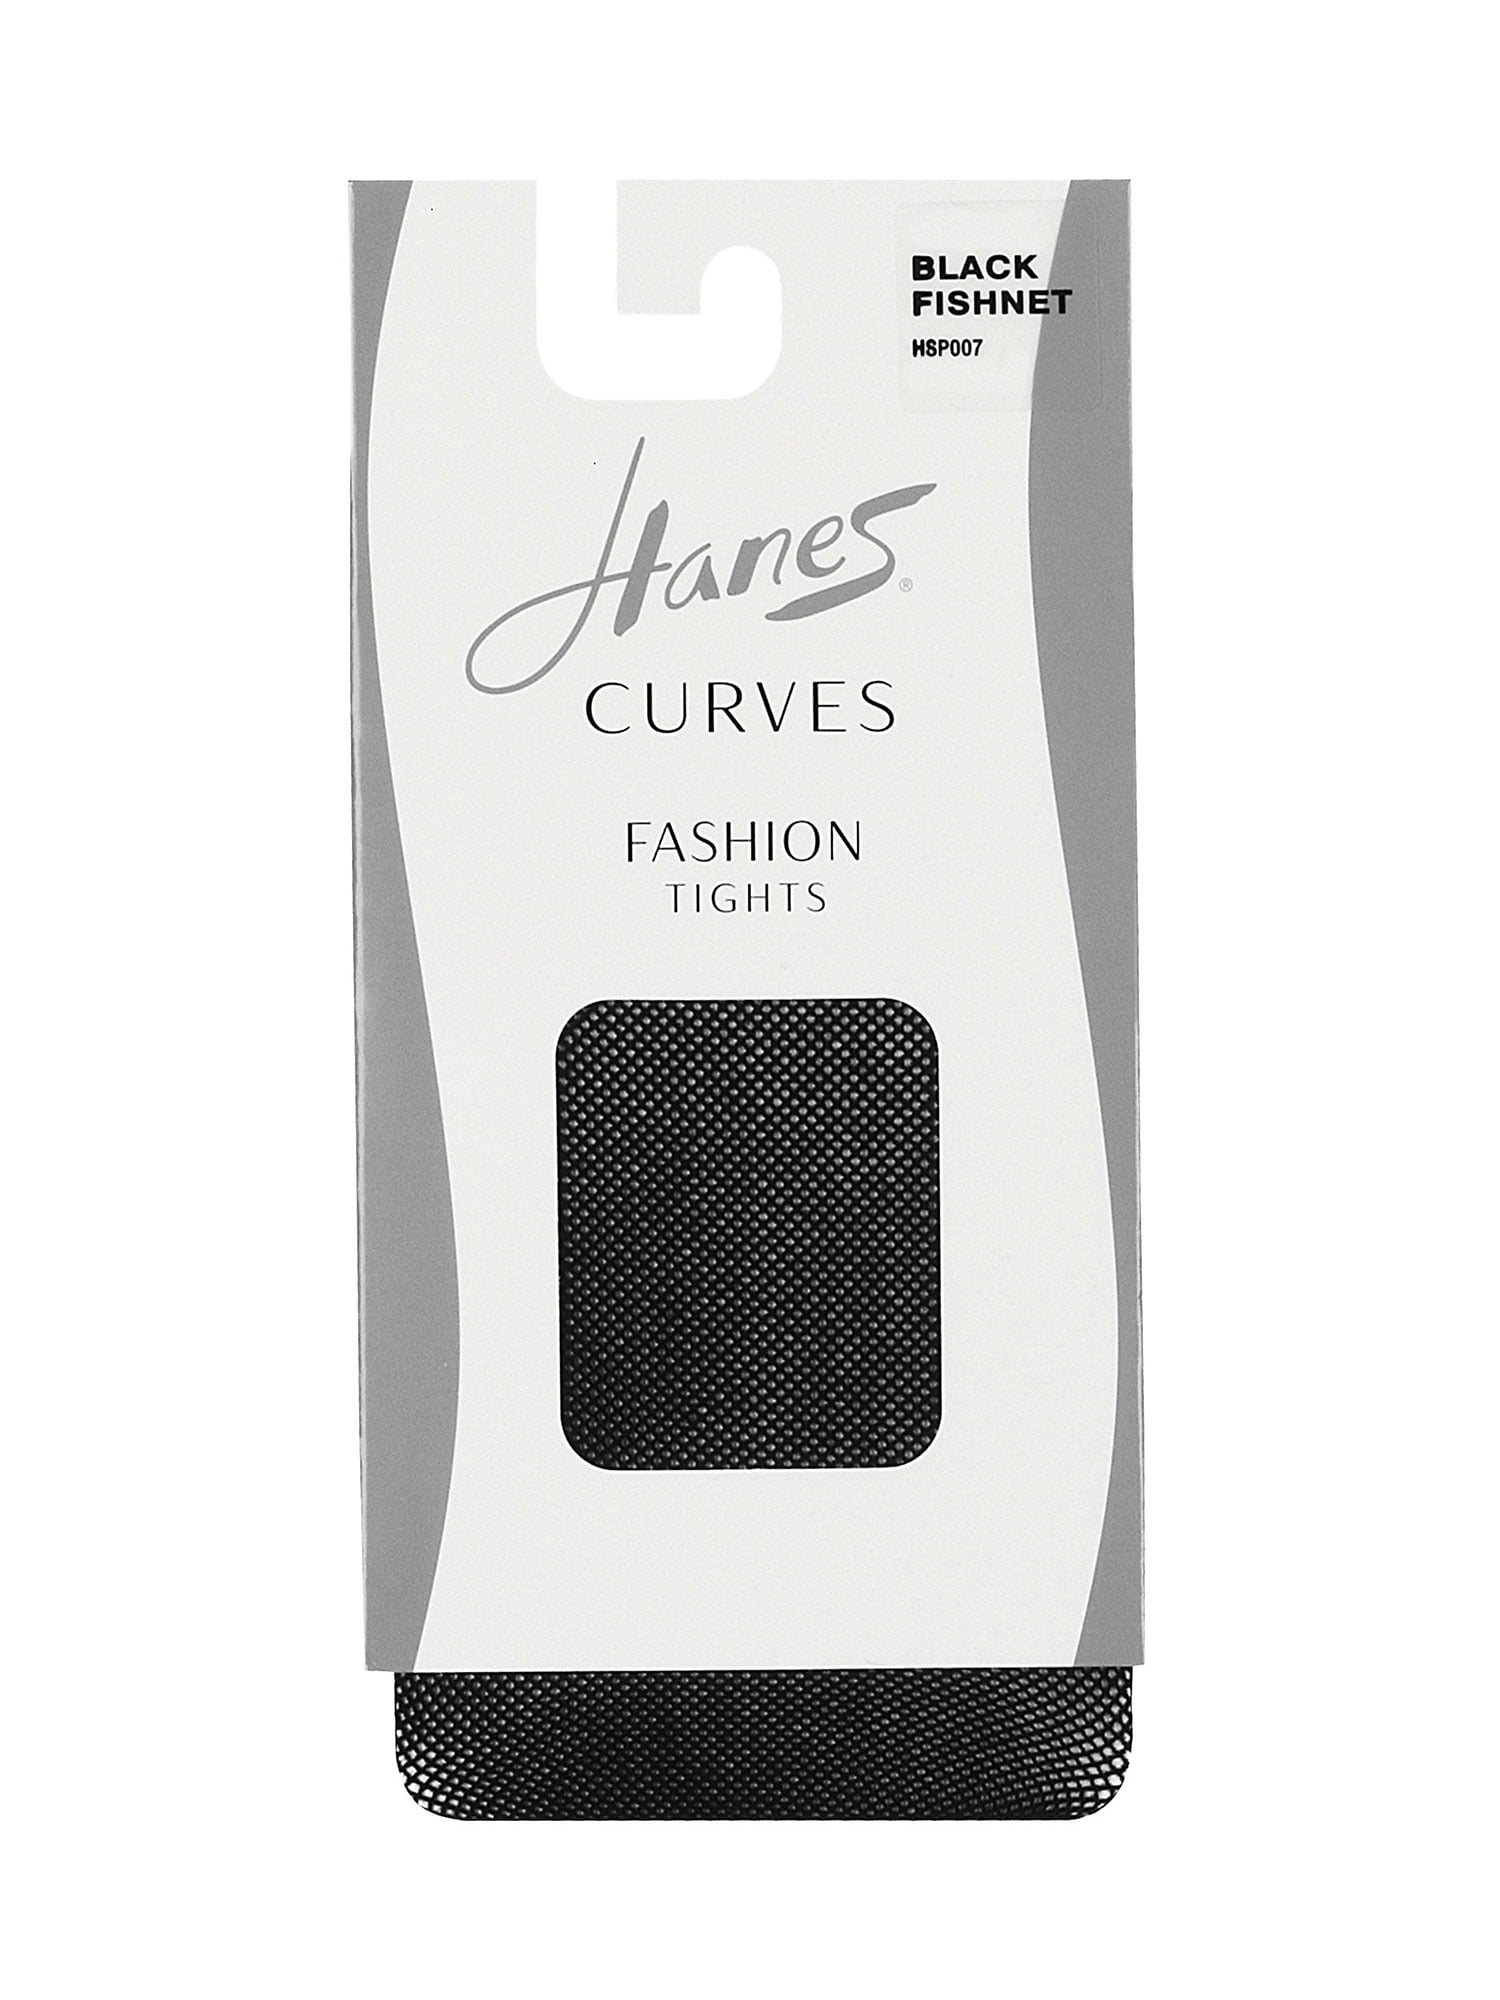 Hanes Curves Fishnet Tights Black 1X/2X Women's